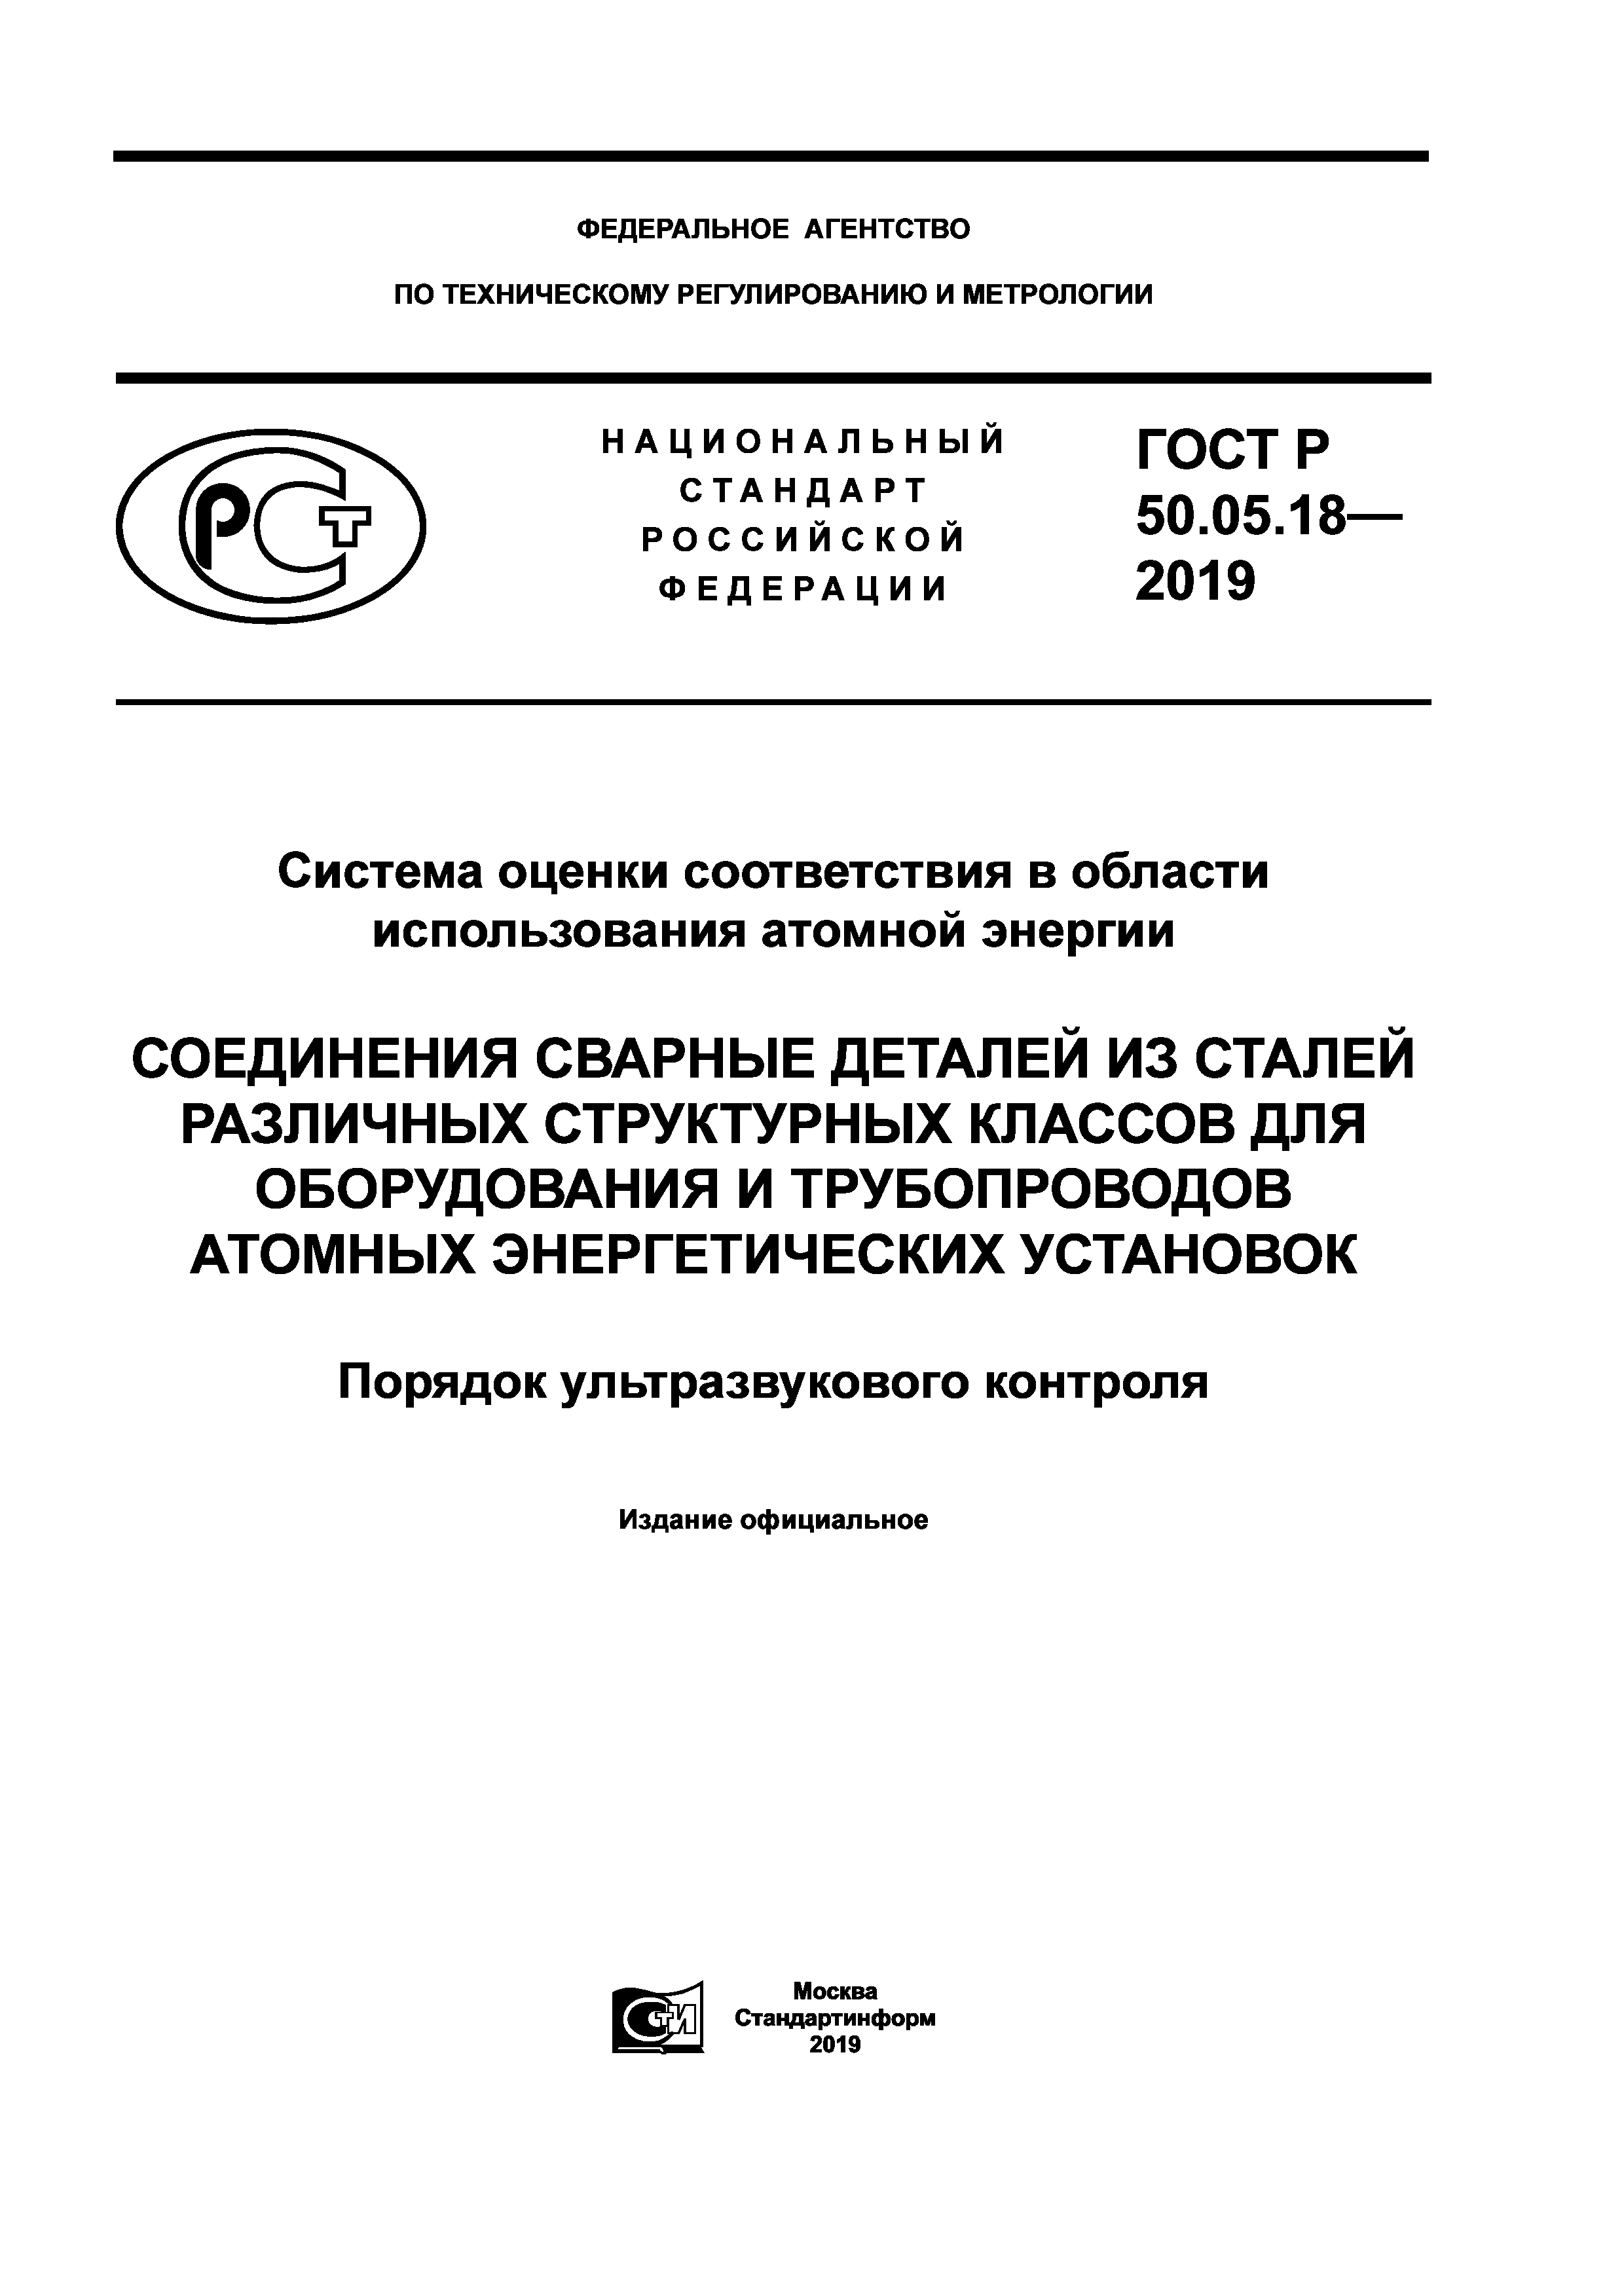 ГОСТ Р 50.05.18-2019